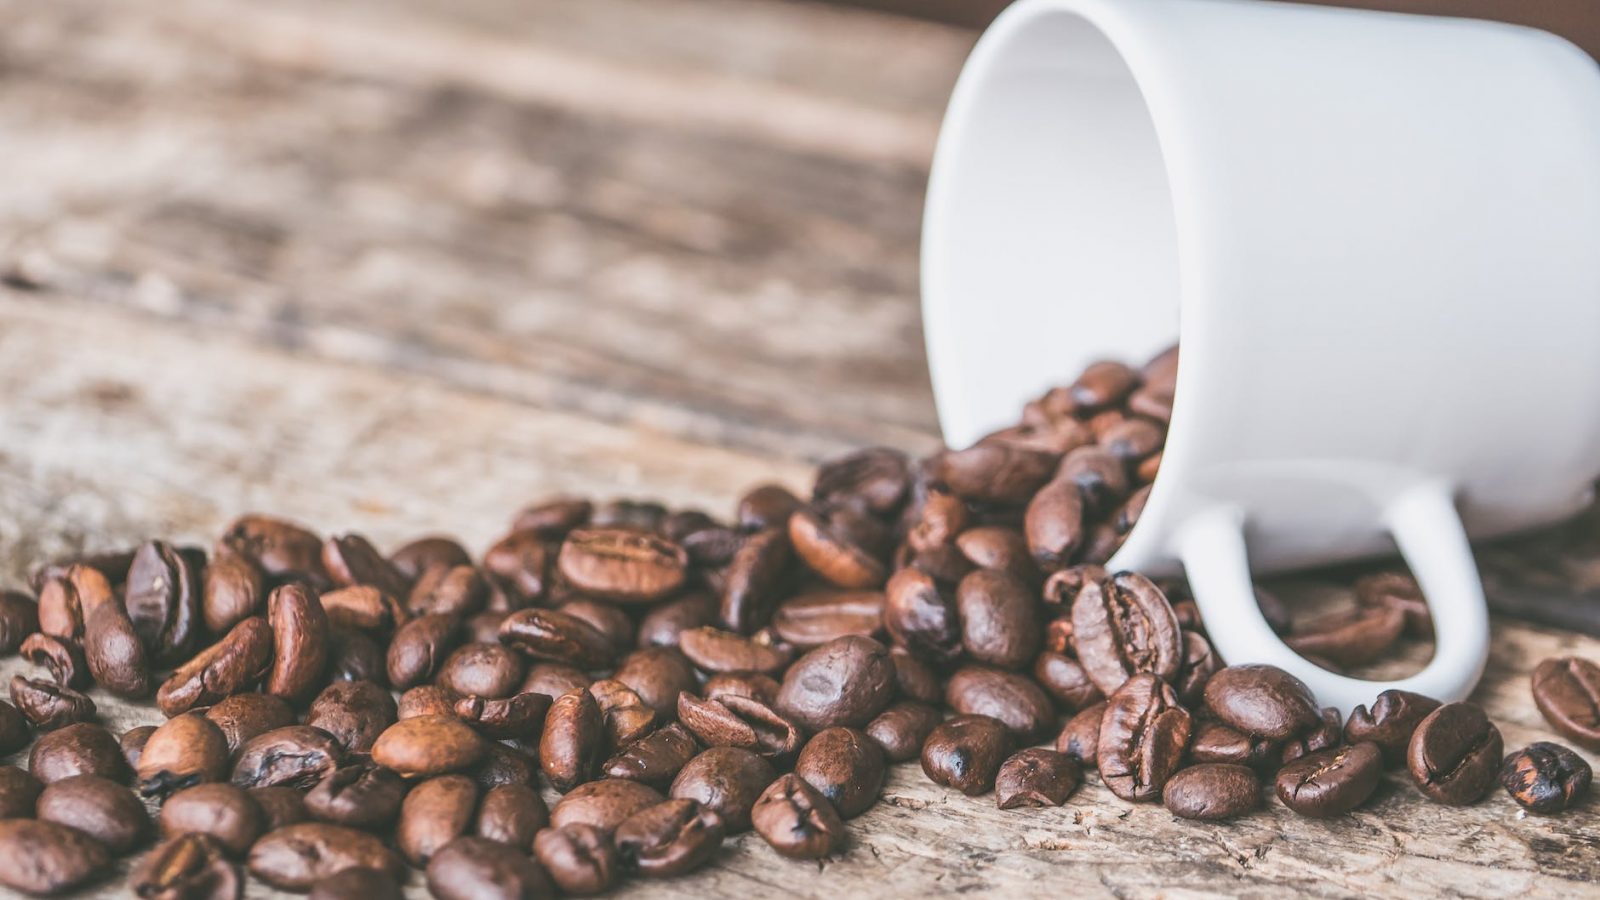 coffee beans and white mug